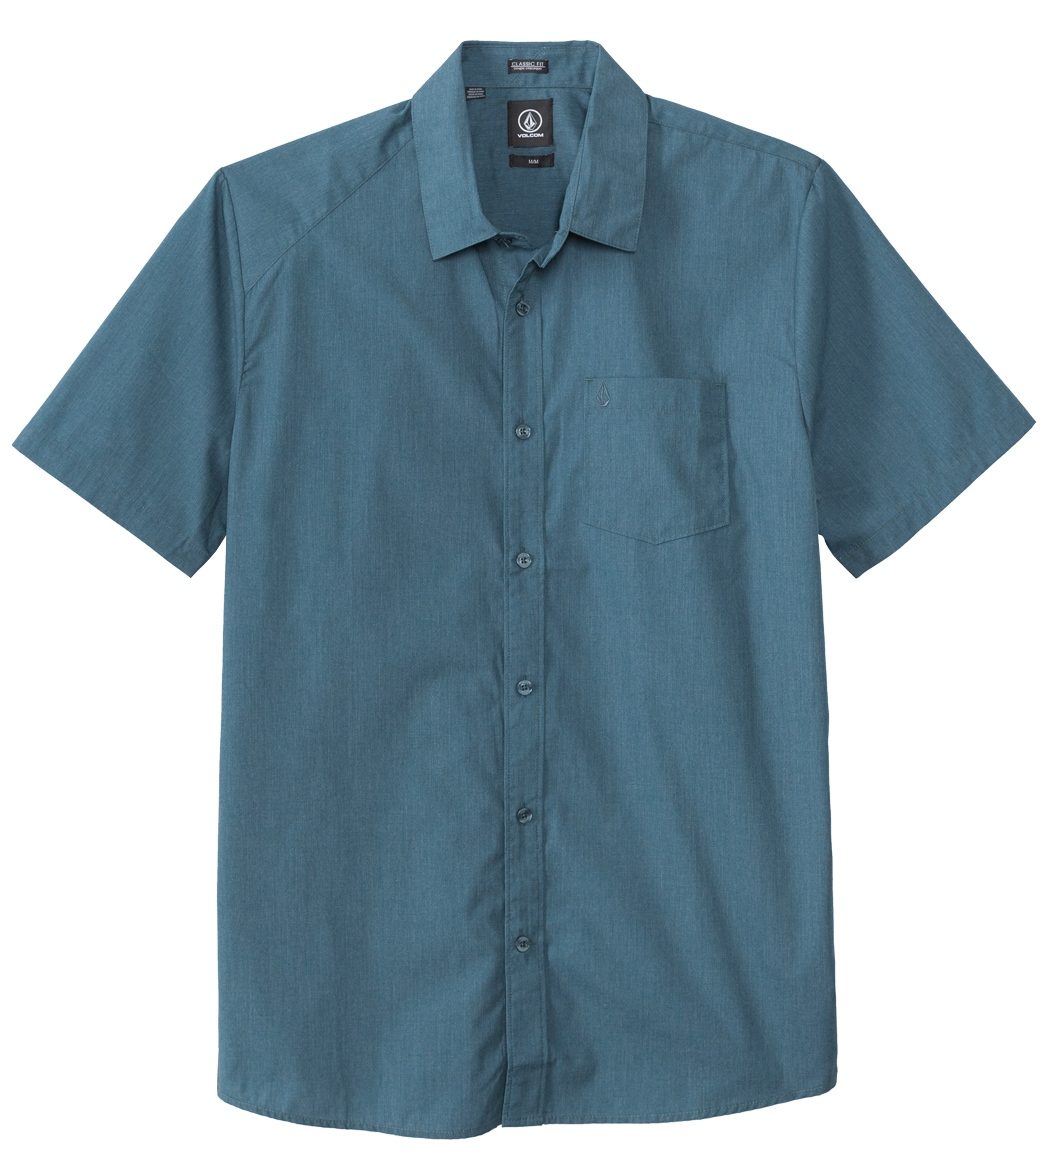 Volcom Men's Everett Solid Short Sleeve Shirt - Airforce Blue X-Small Cotton/Polyester - Swimoutlet.com